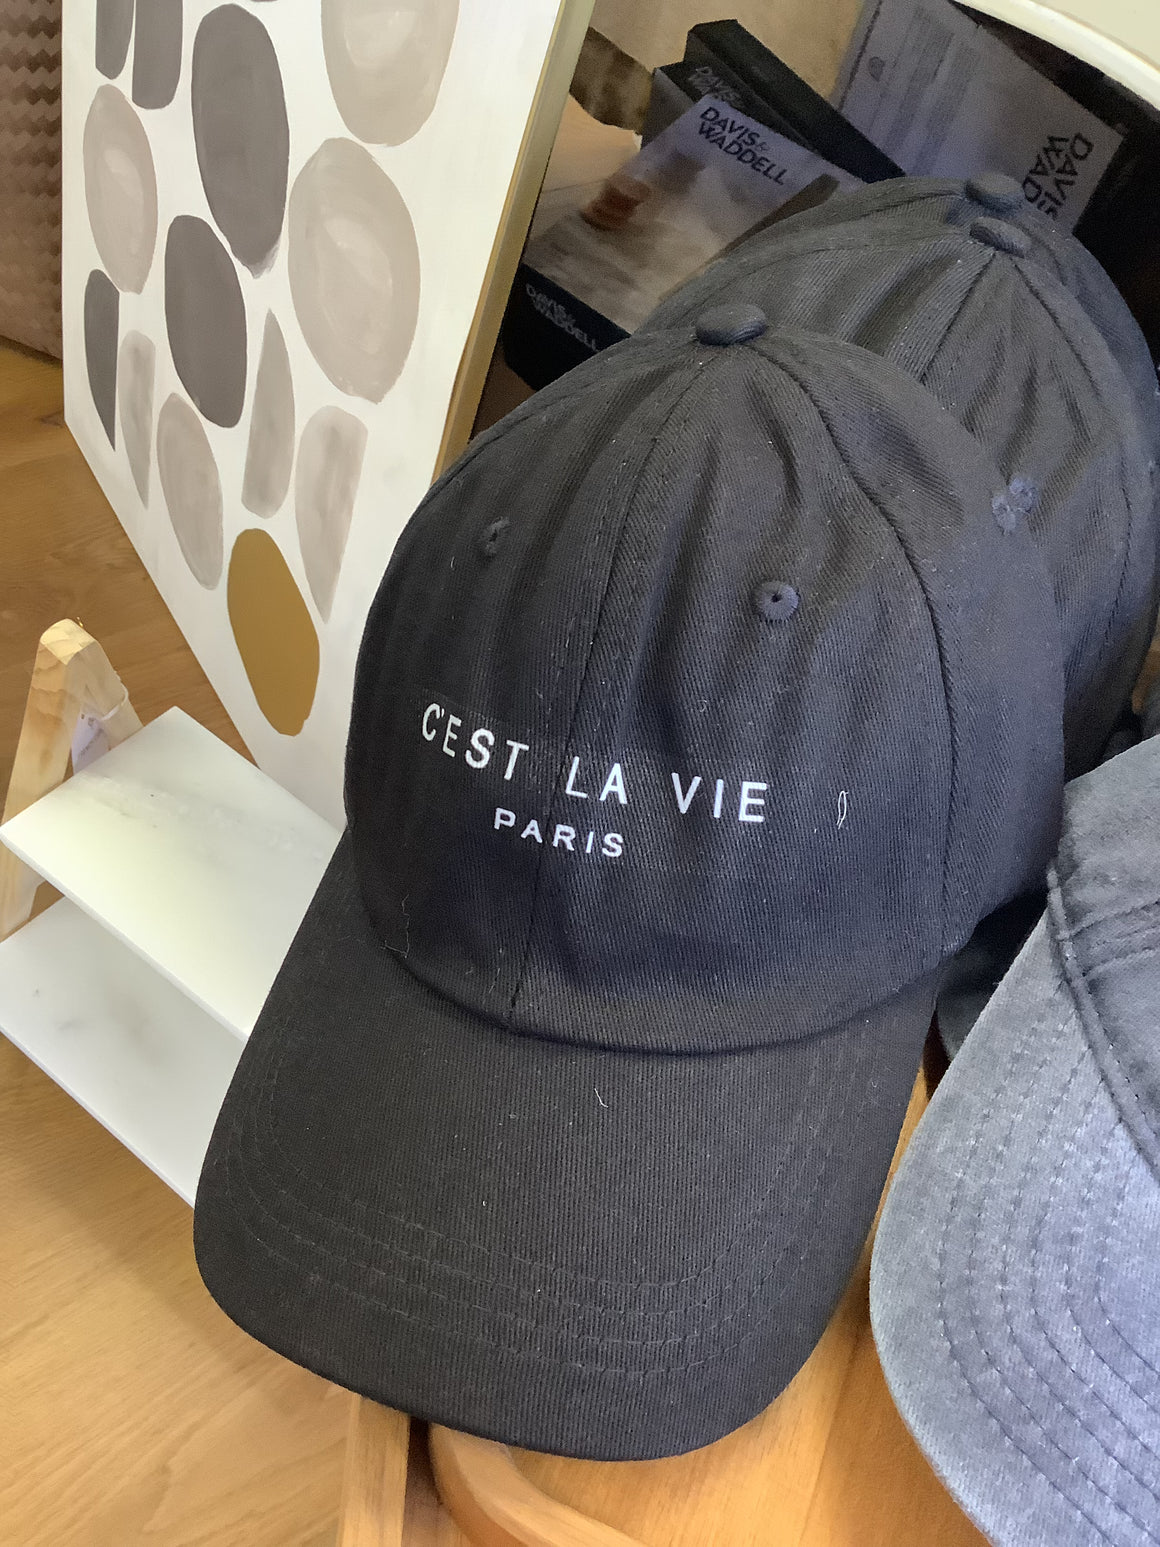 Cotton Caps - Paris